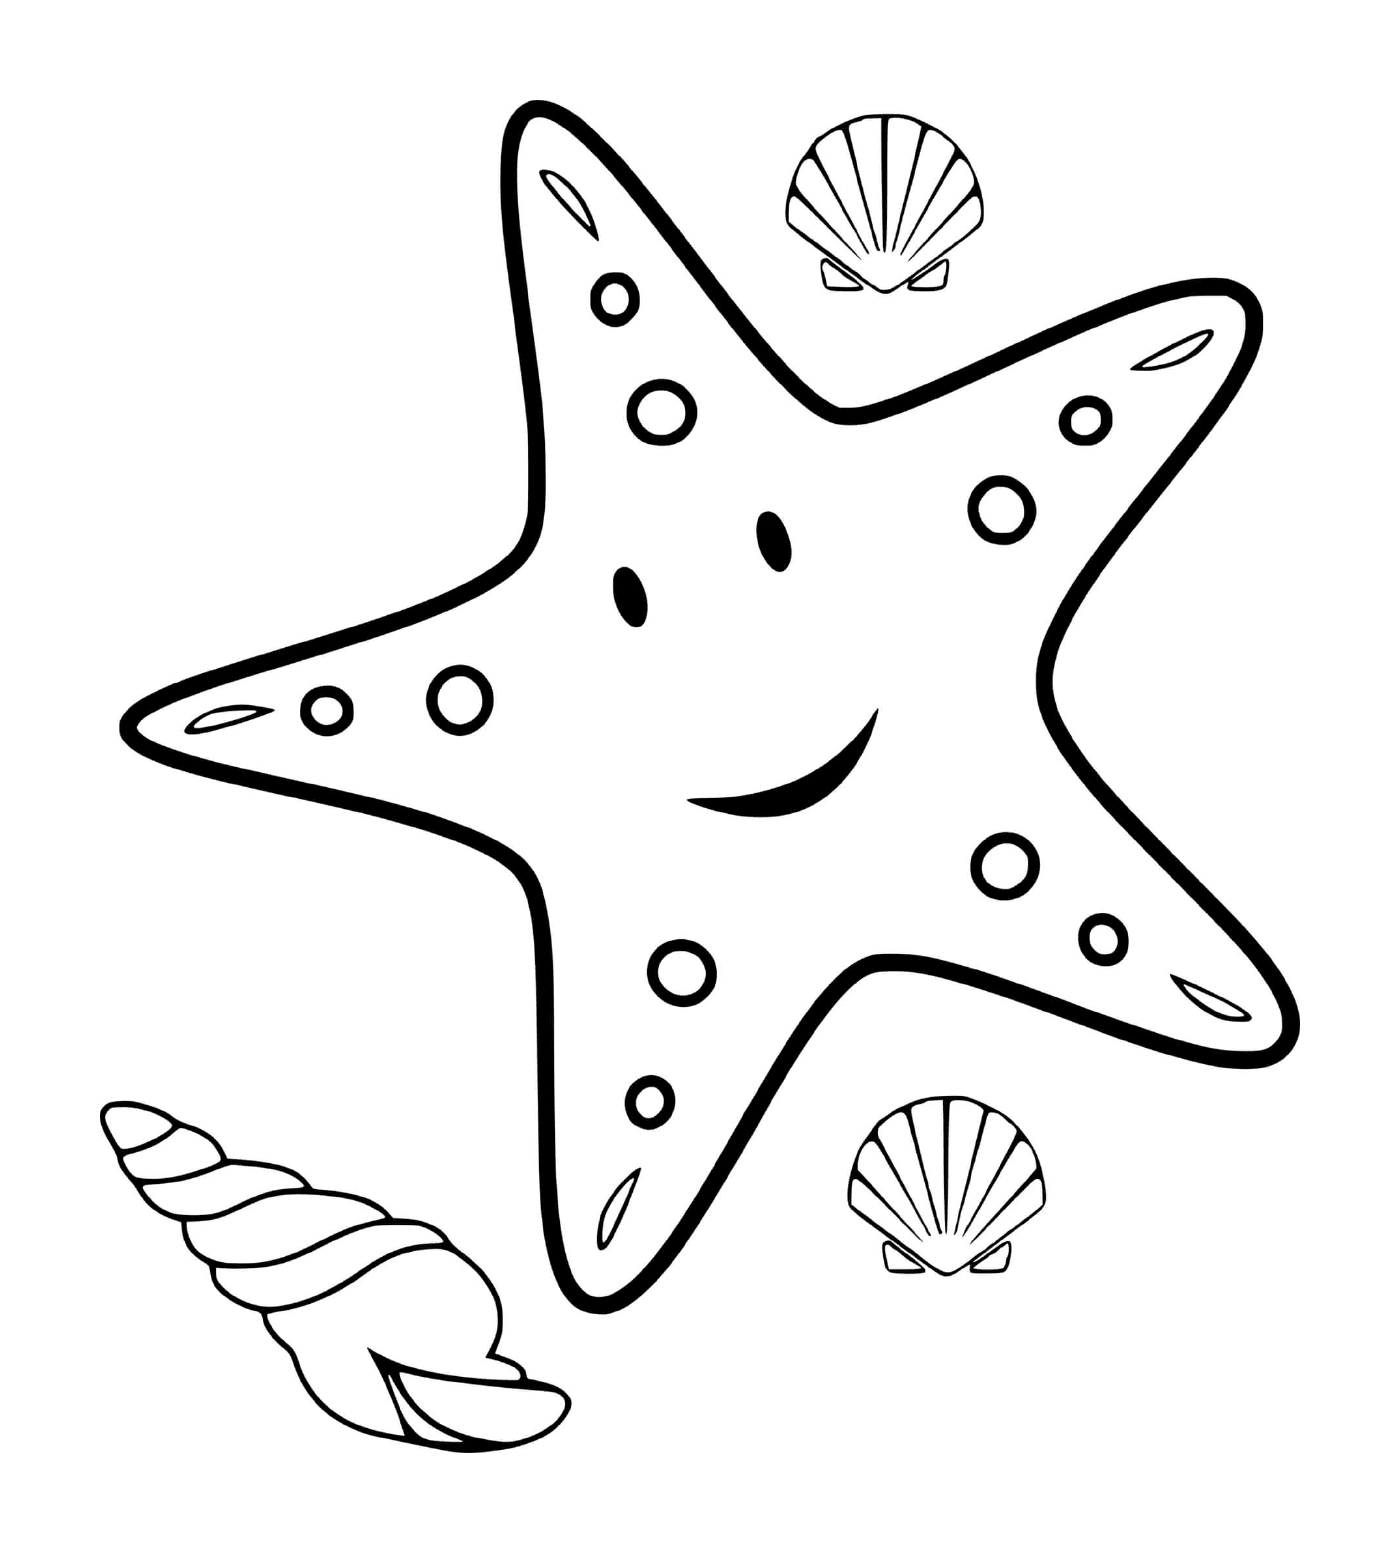  Coloured sea star 